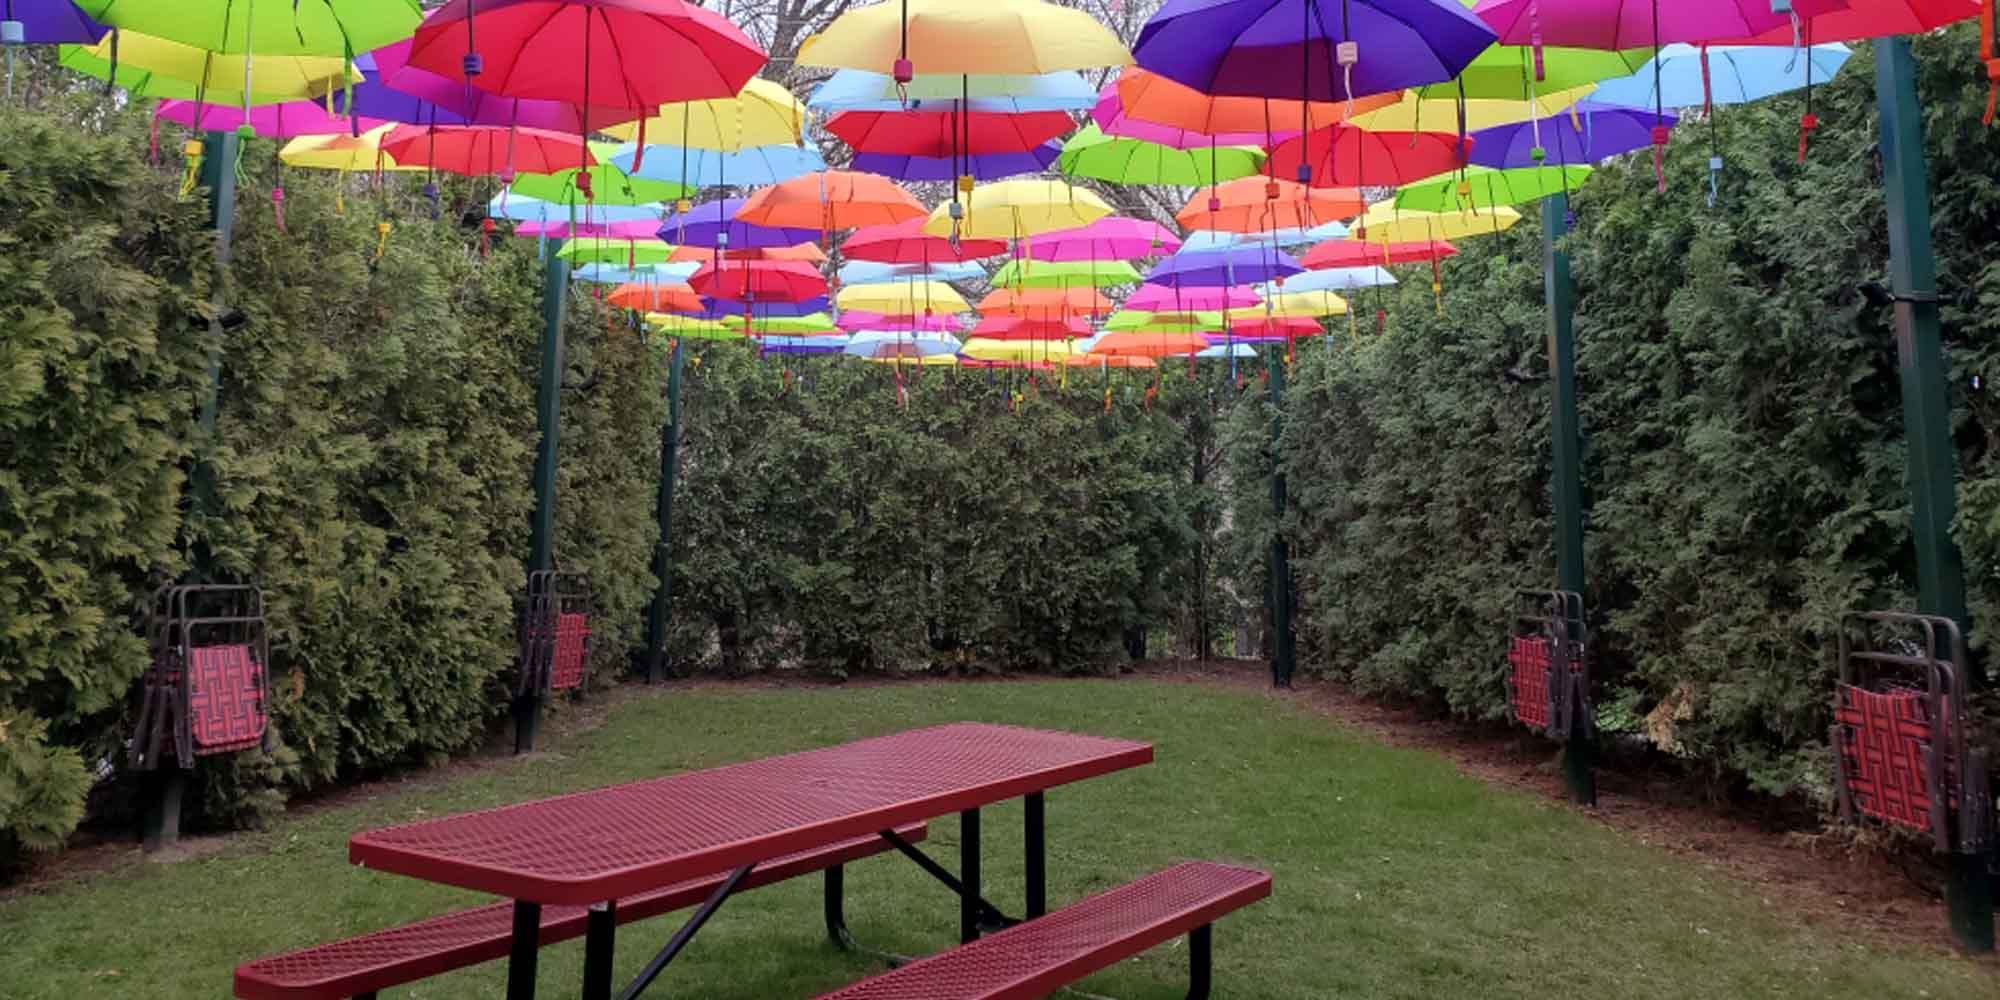 Adeline's House of Cool umbrella garden